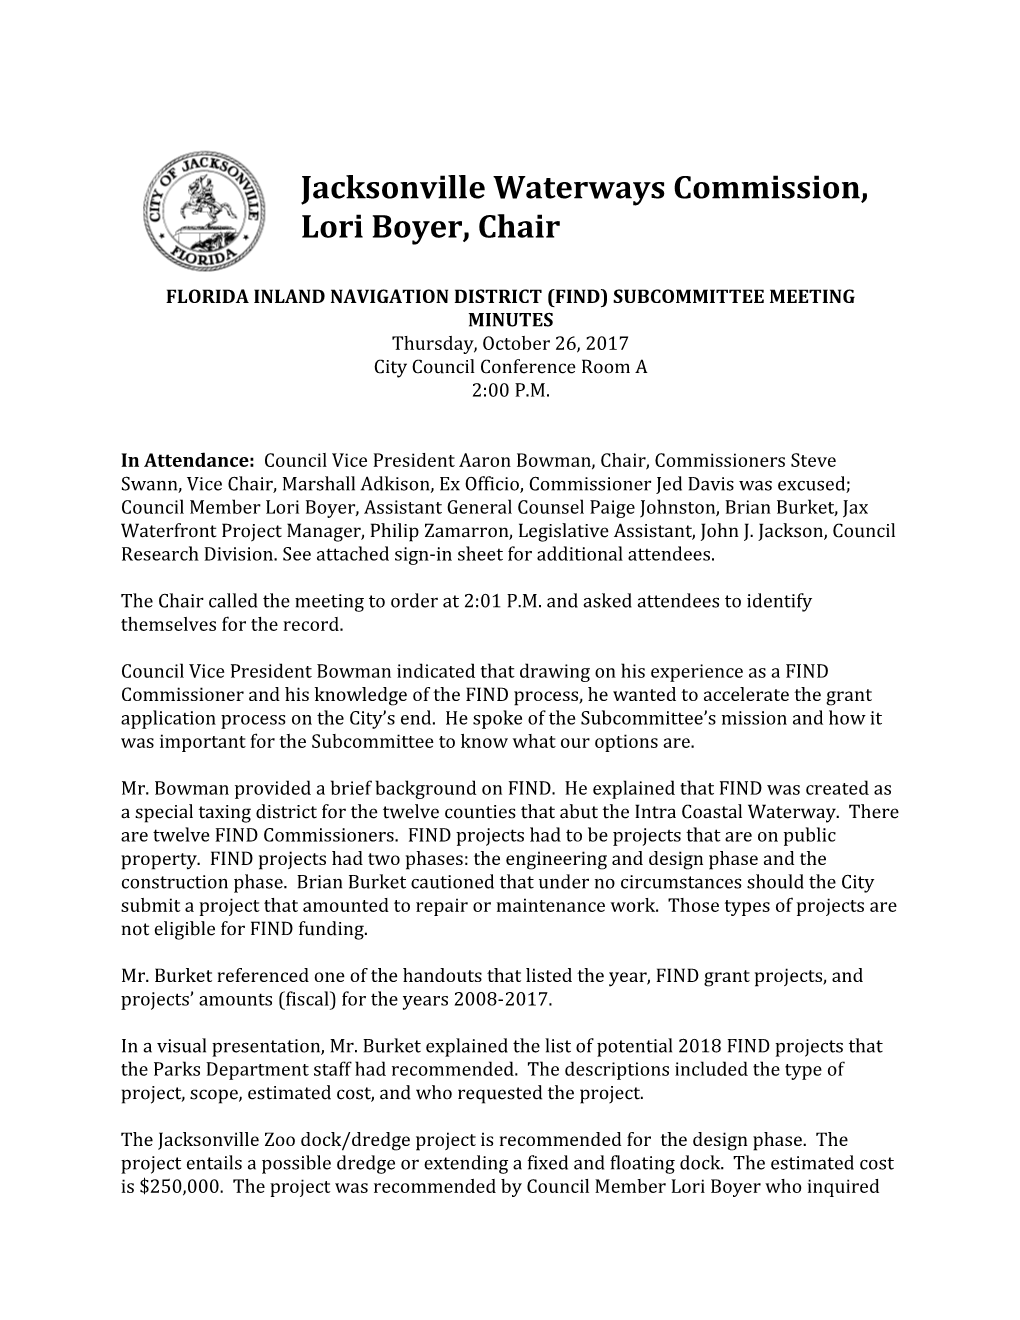 Jacksonville Waterways Commission, Lori Boyer, Chair